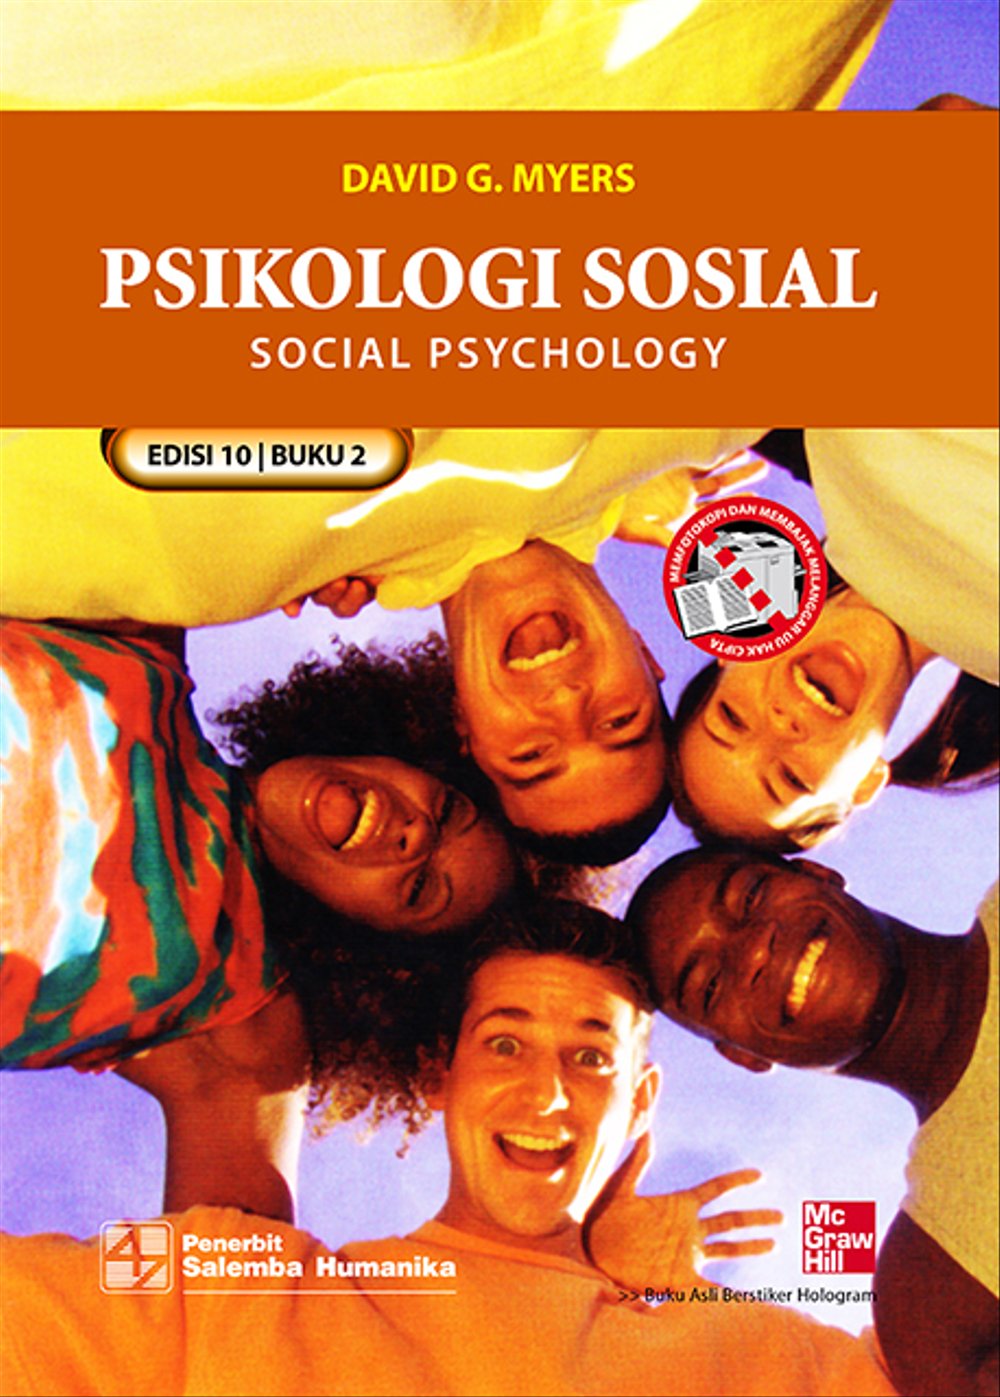 PSIKOLOGI SOSIAL; Social Psychology